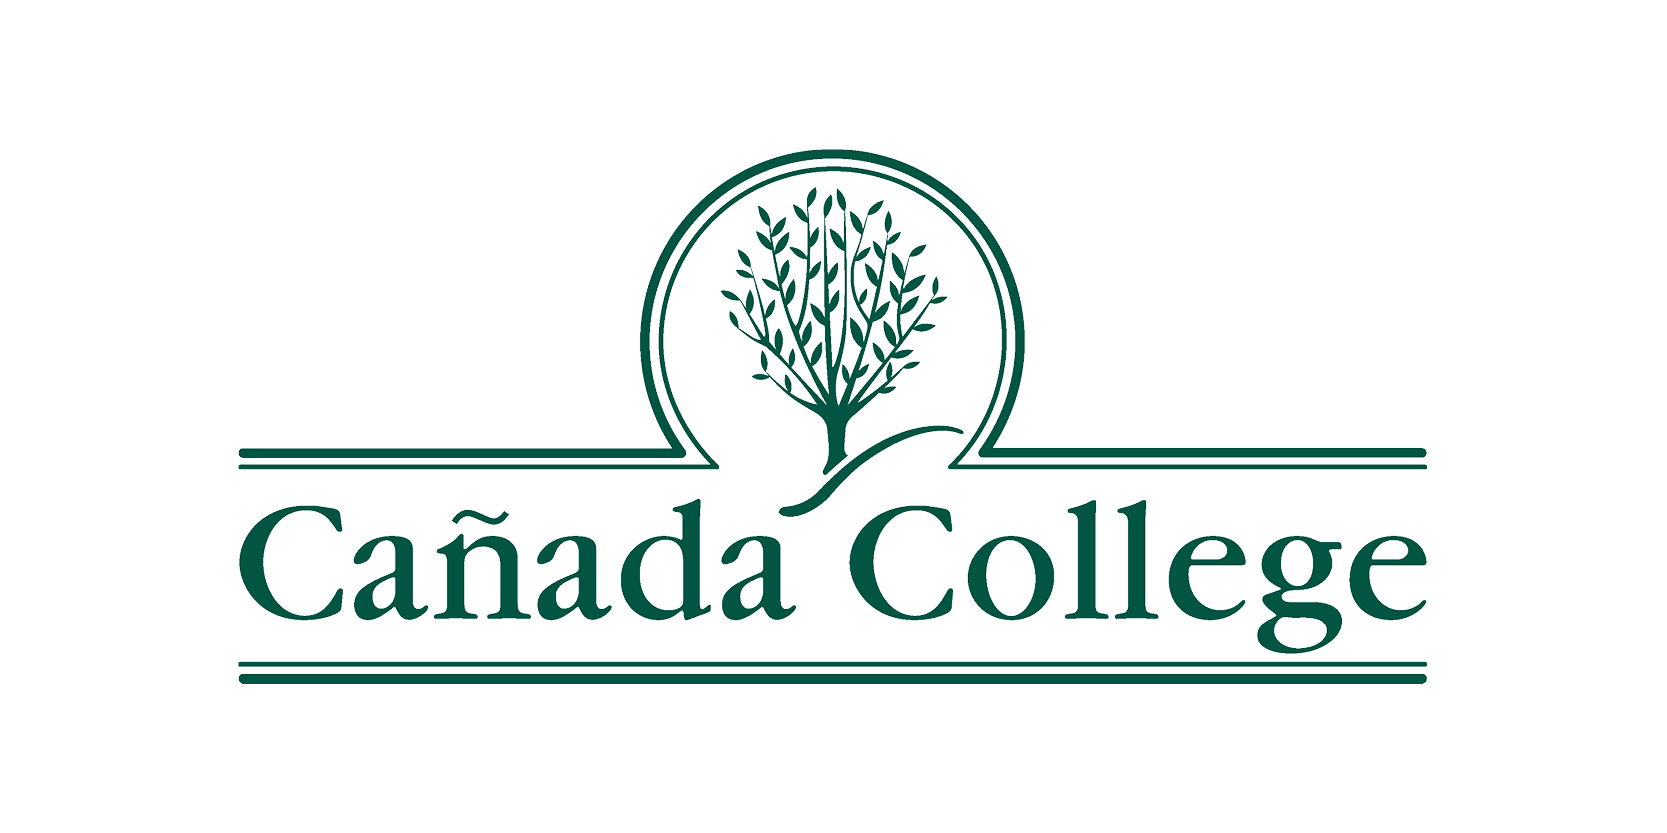 canada college logo